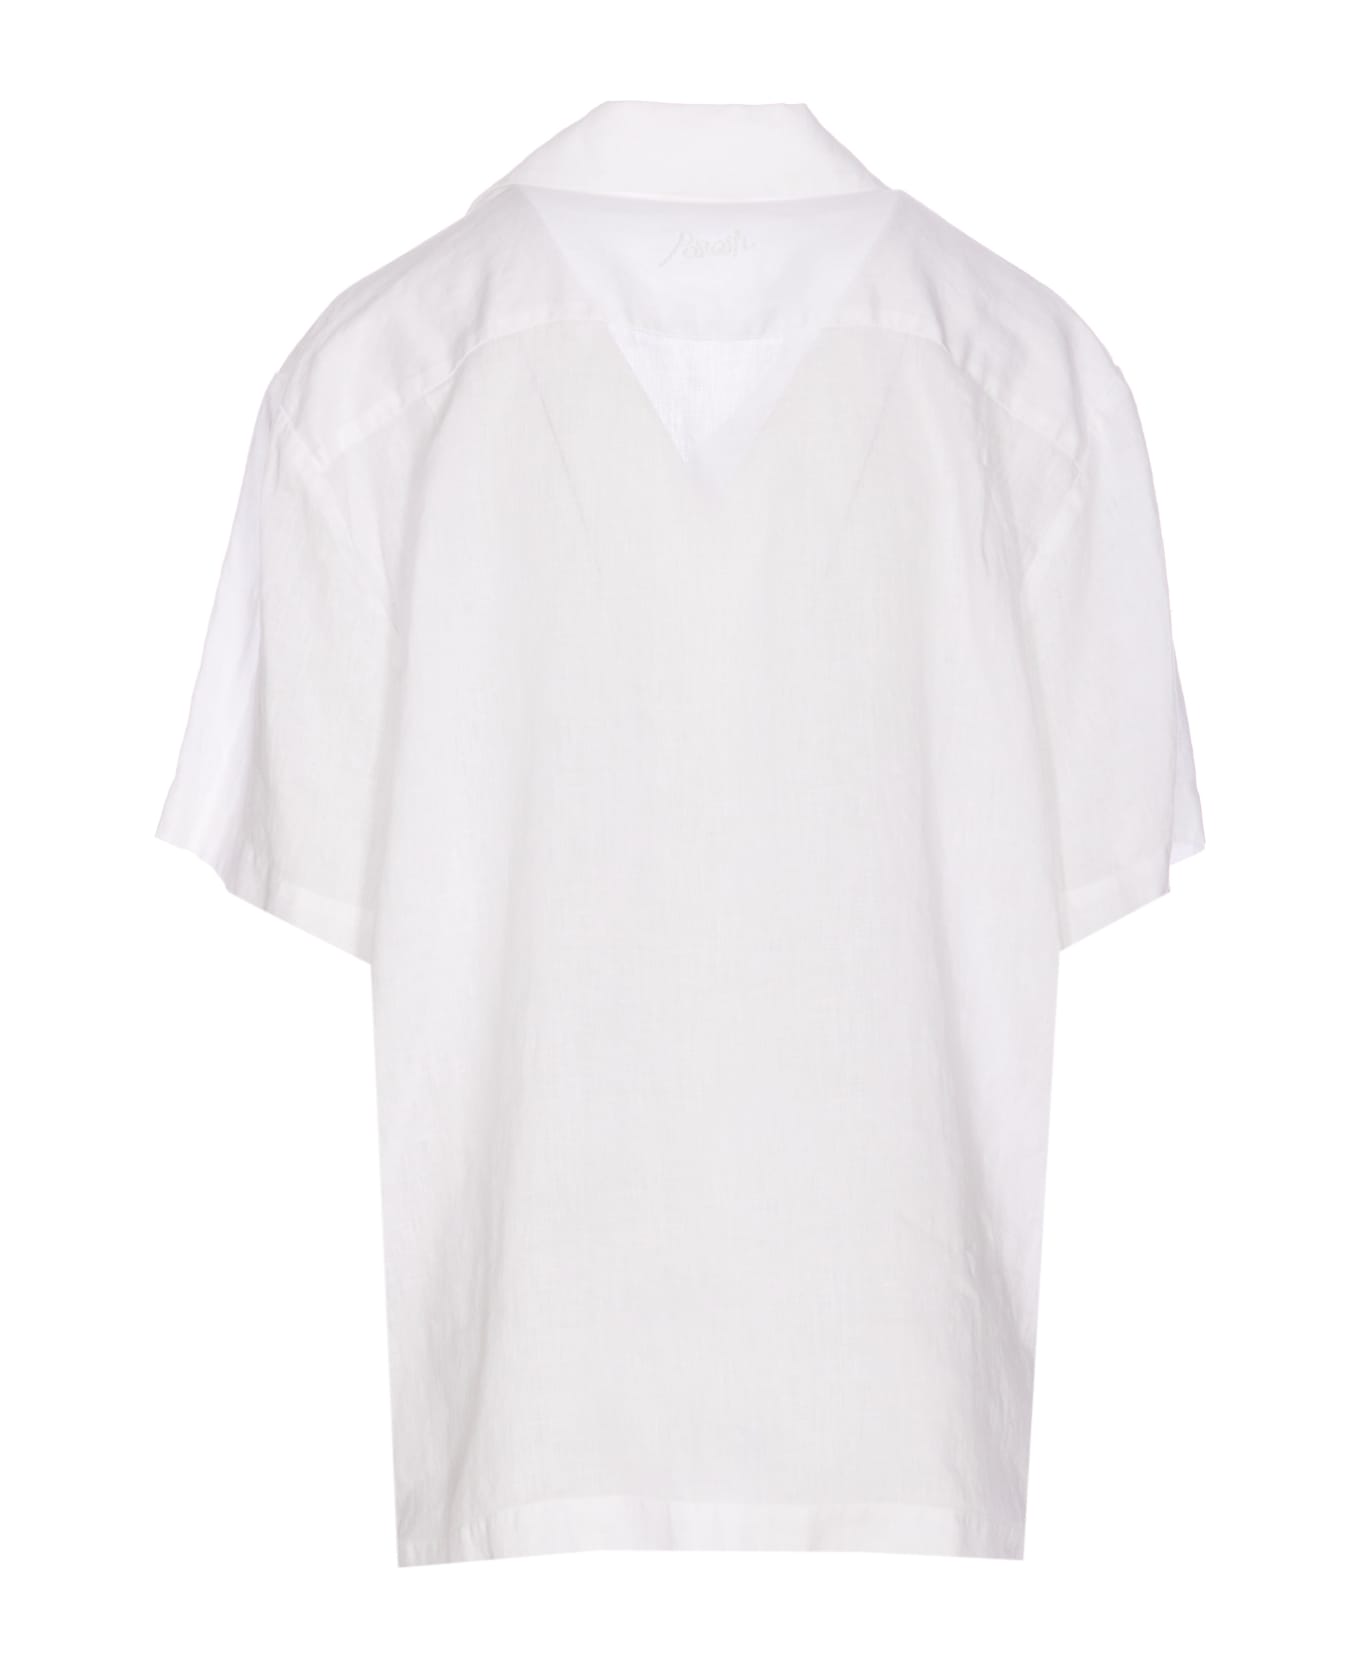 Parosh Beach Shirt - White シャツ